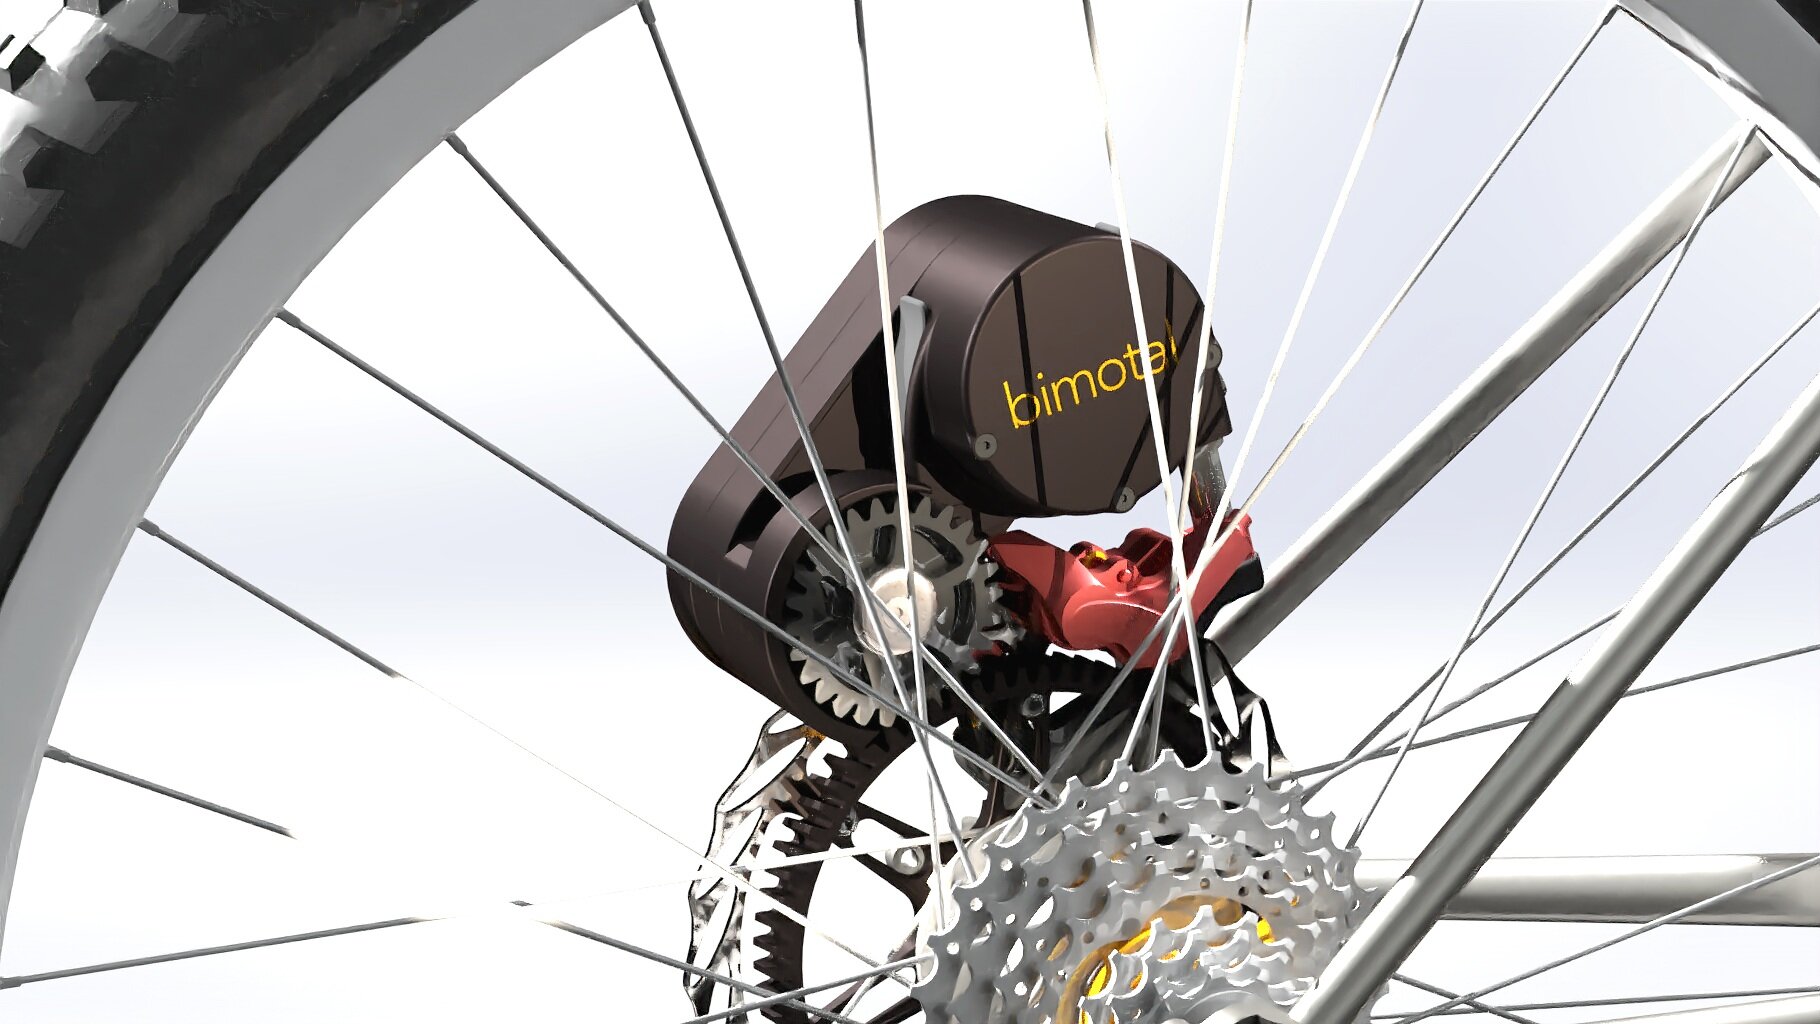 bicycle disc brake conversion kits